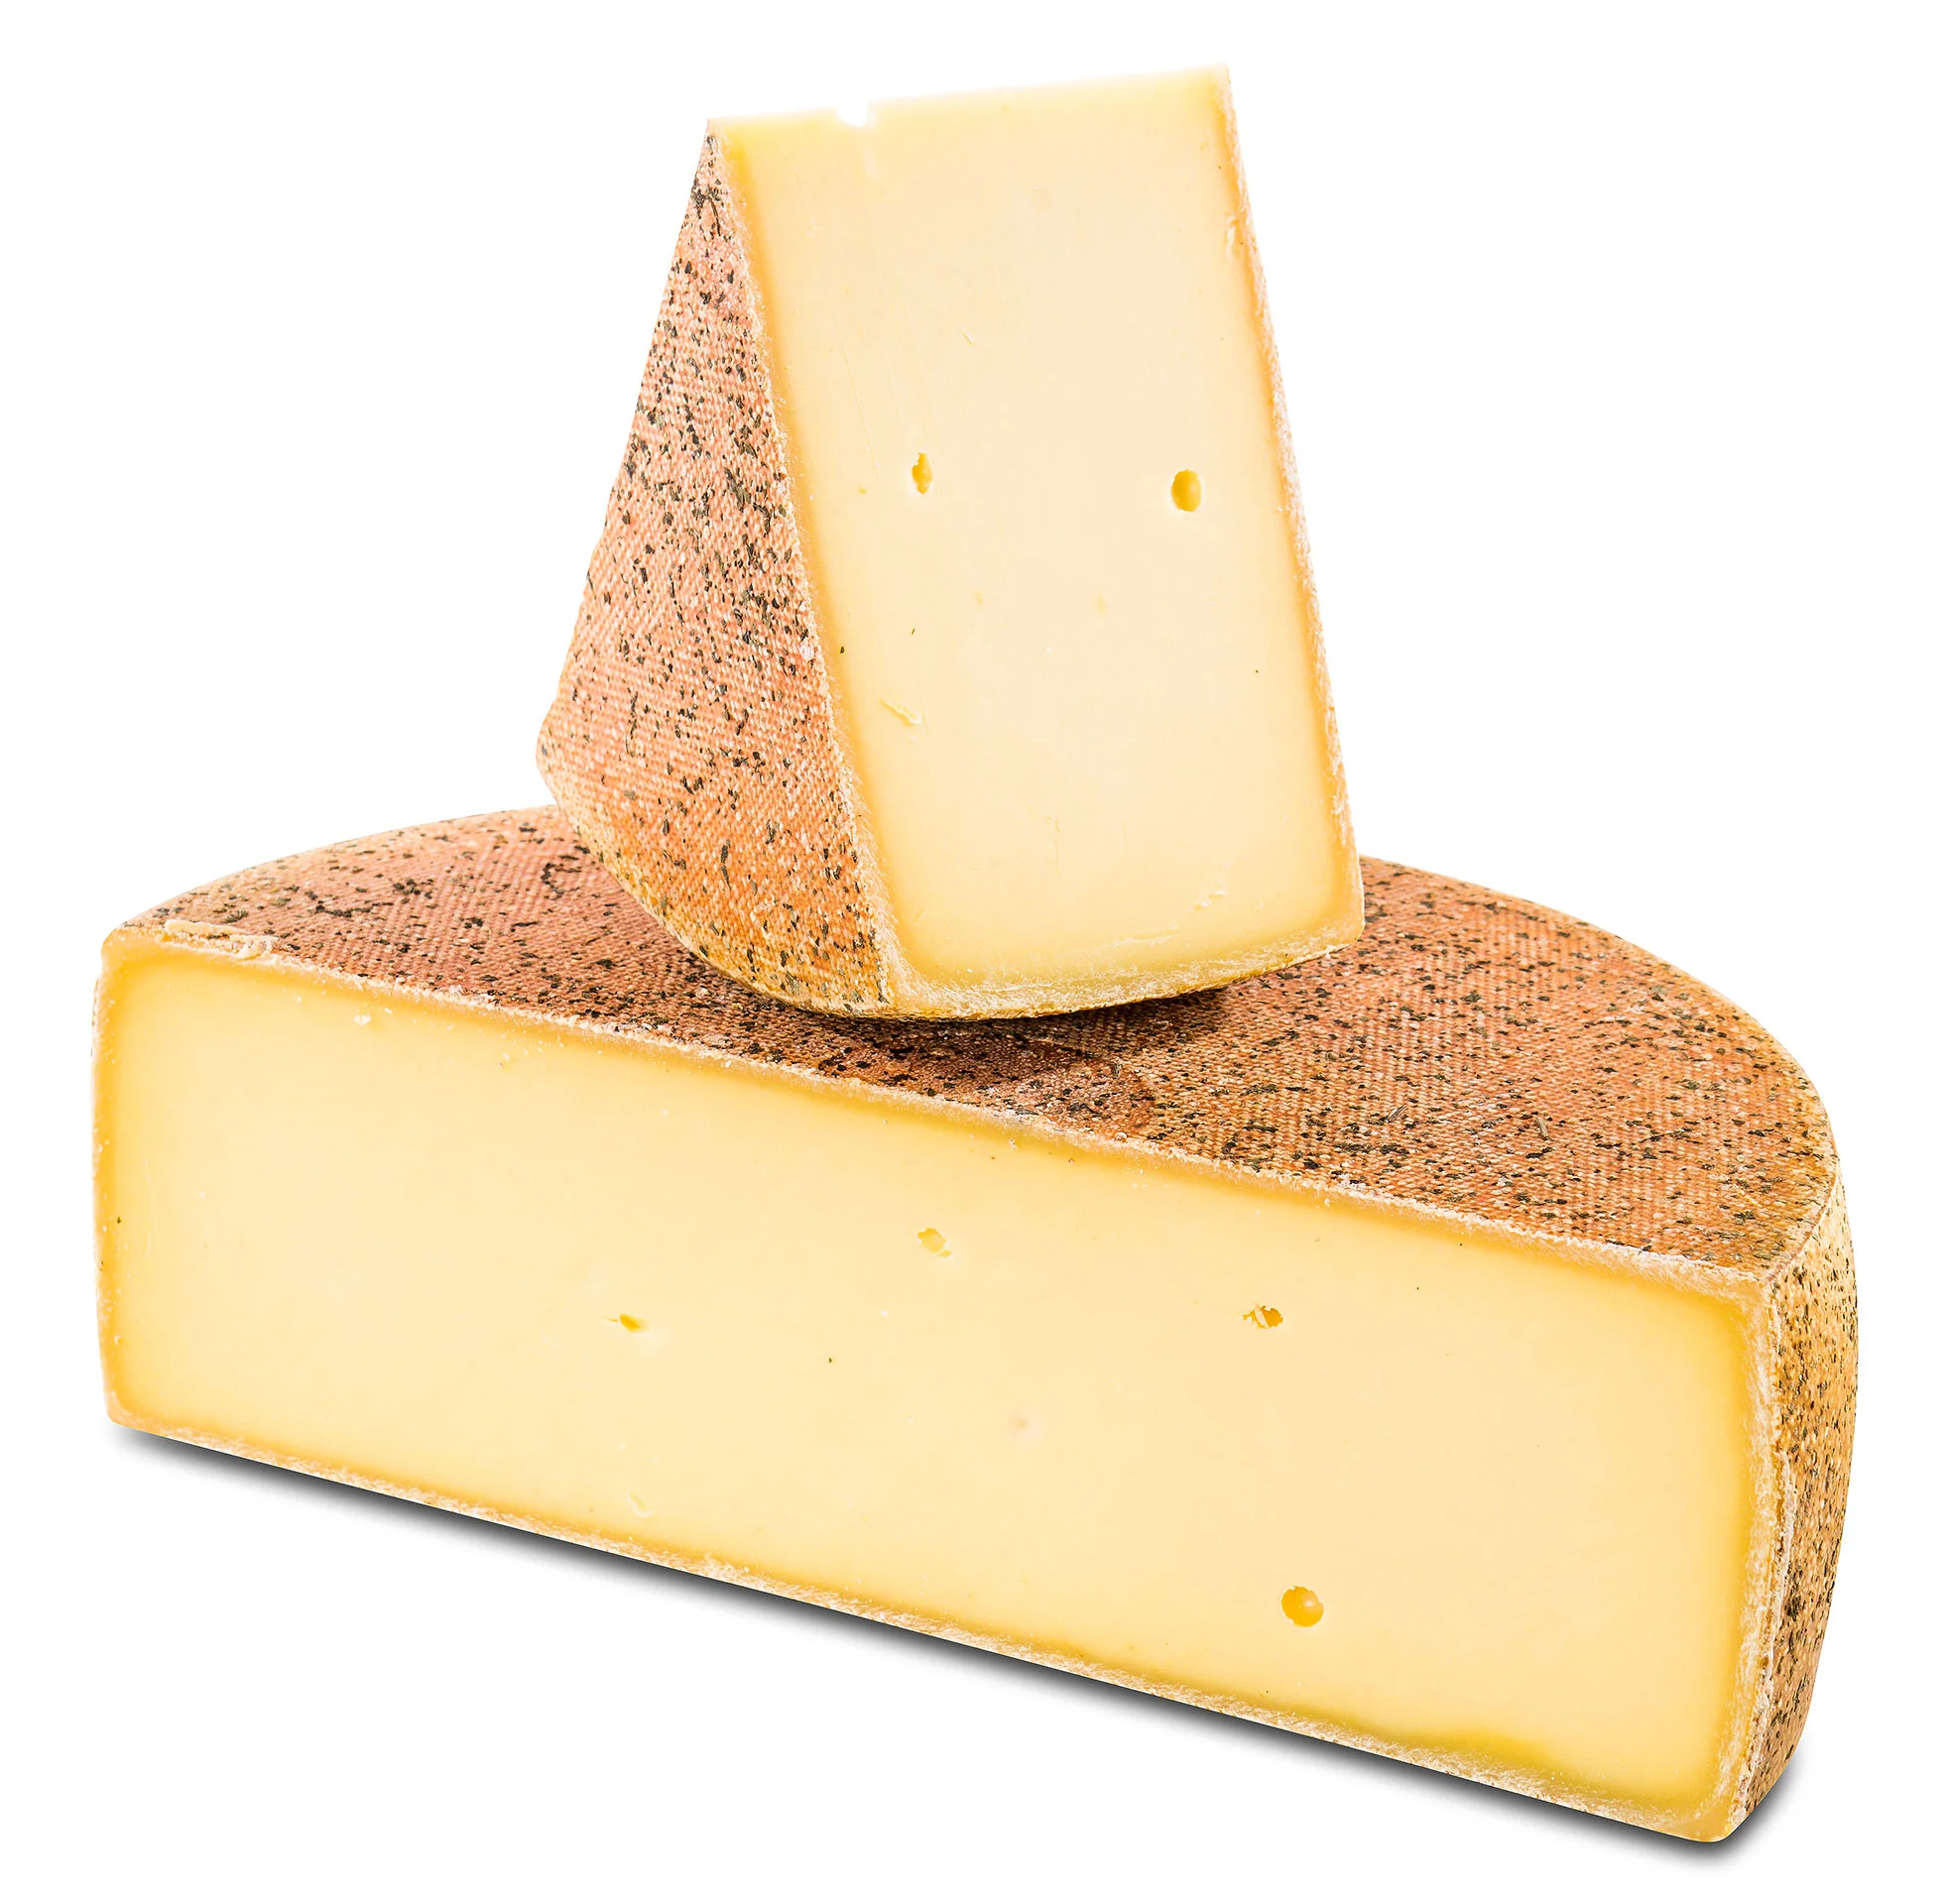 Henri's Bergwiesen Käse